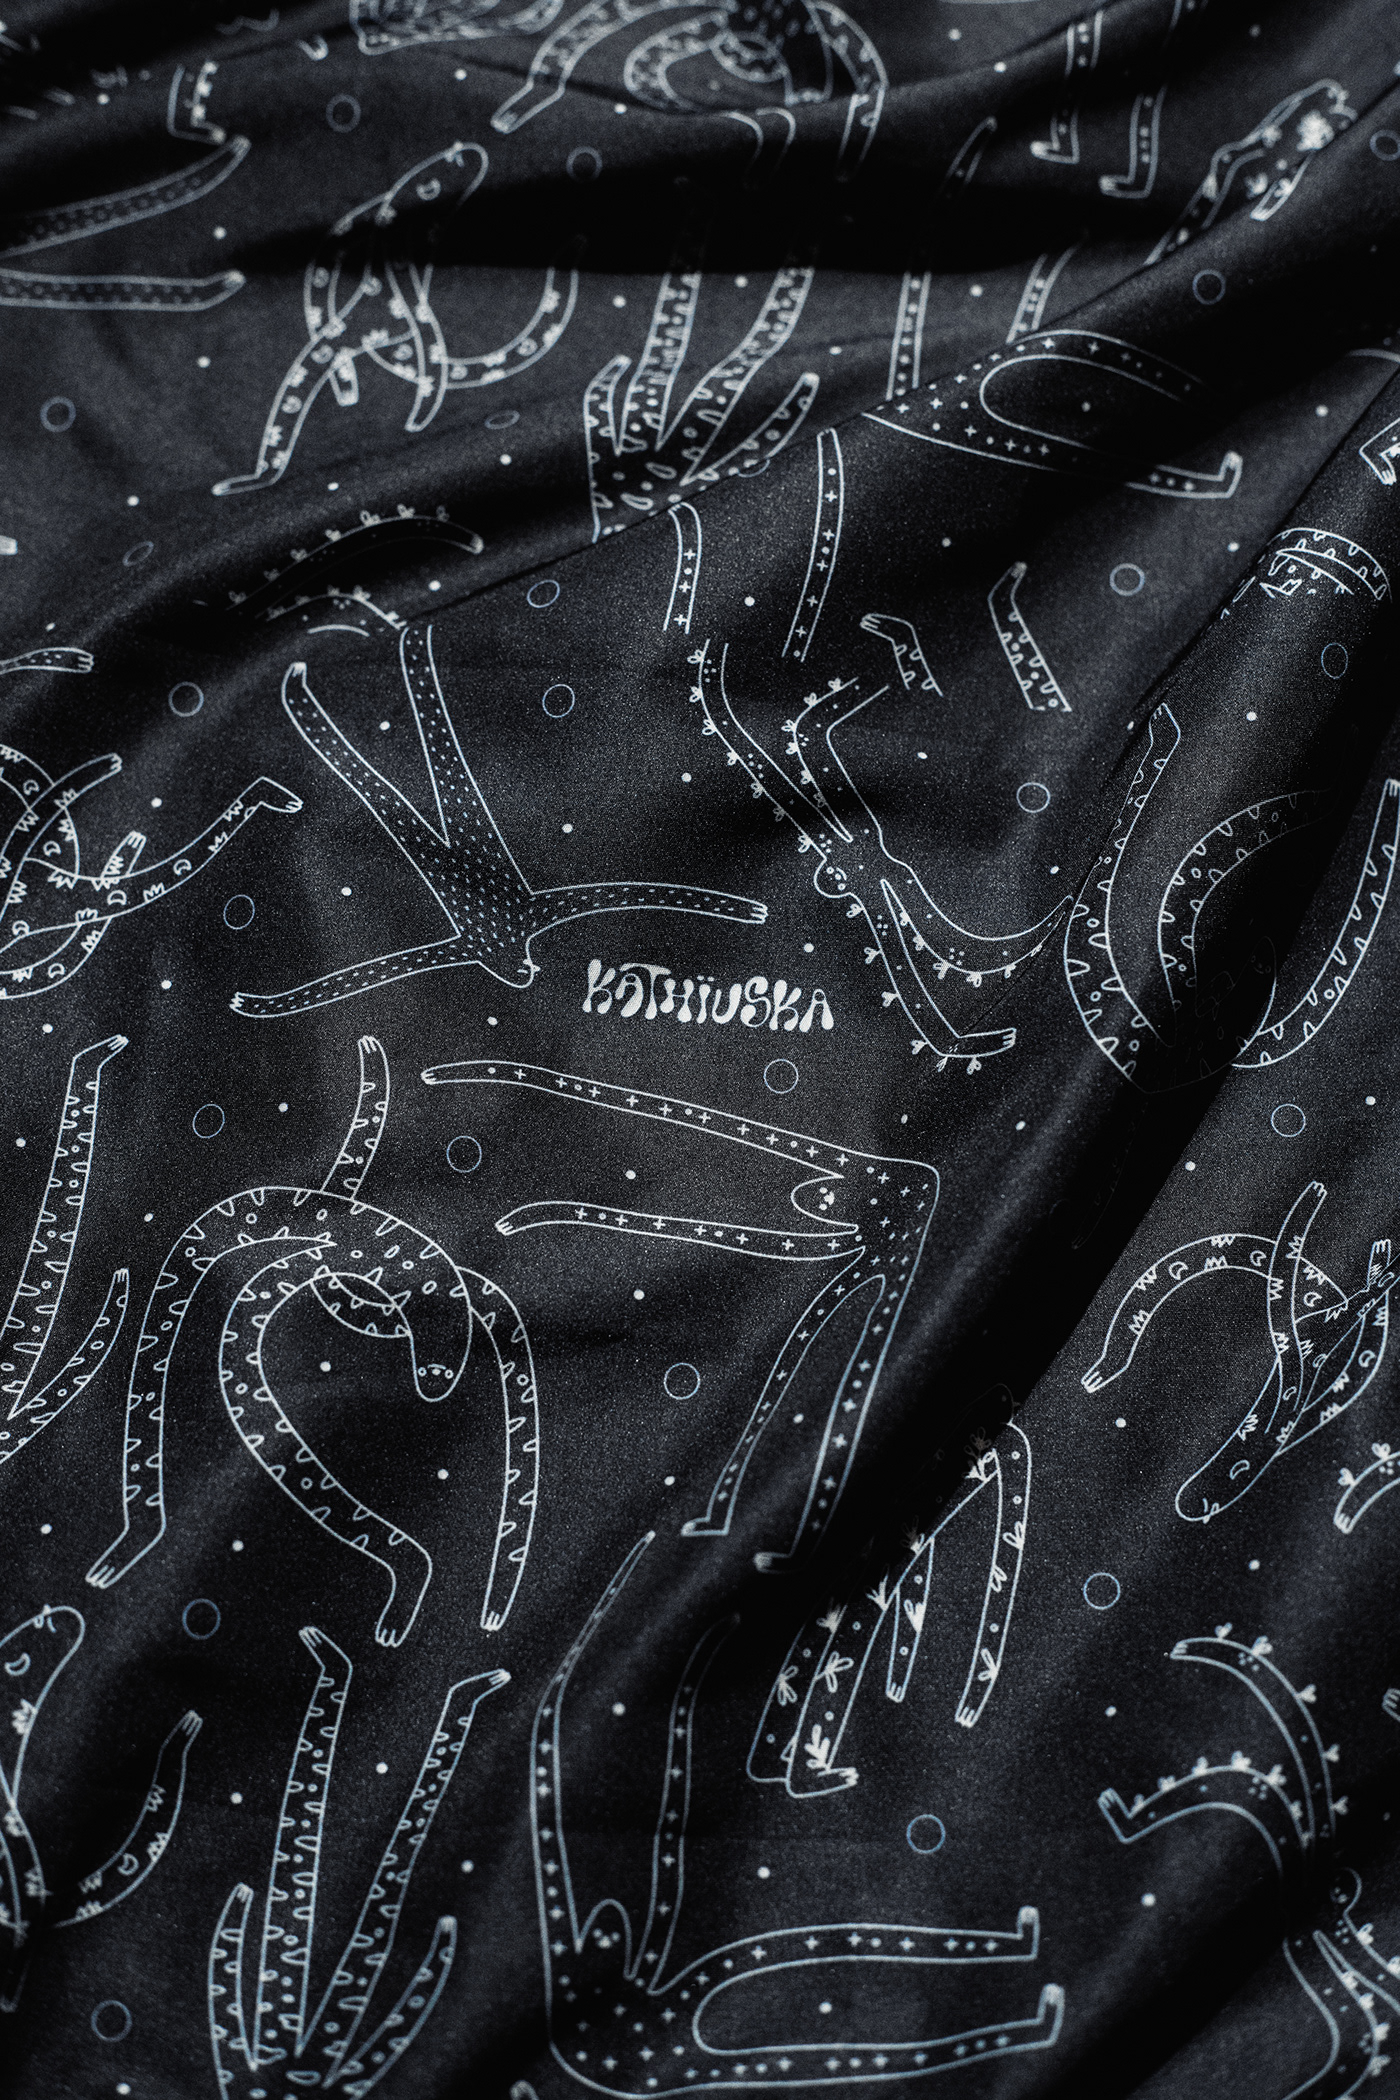 fabric jacket pattern textile